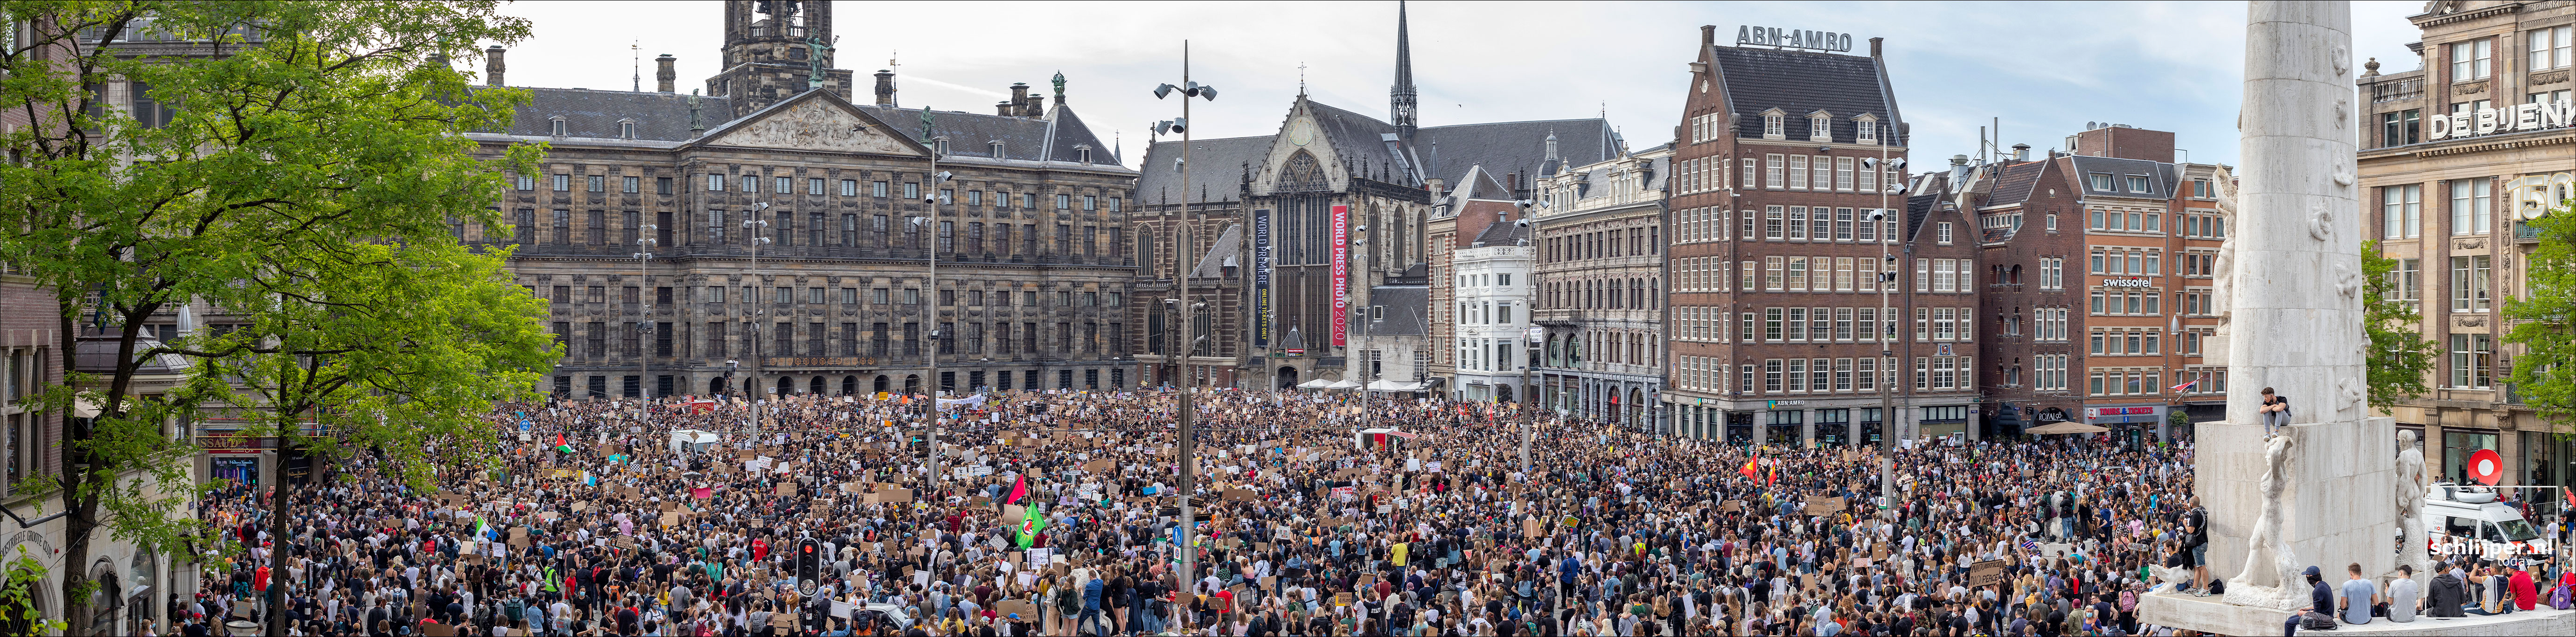 Nederland, Amsterdam, 1 juni 2020